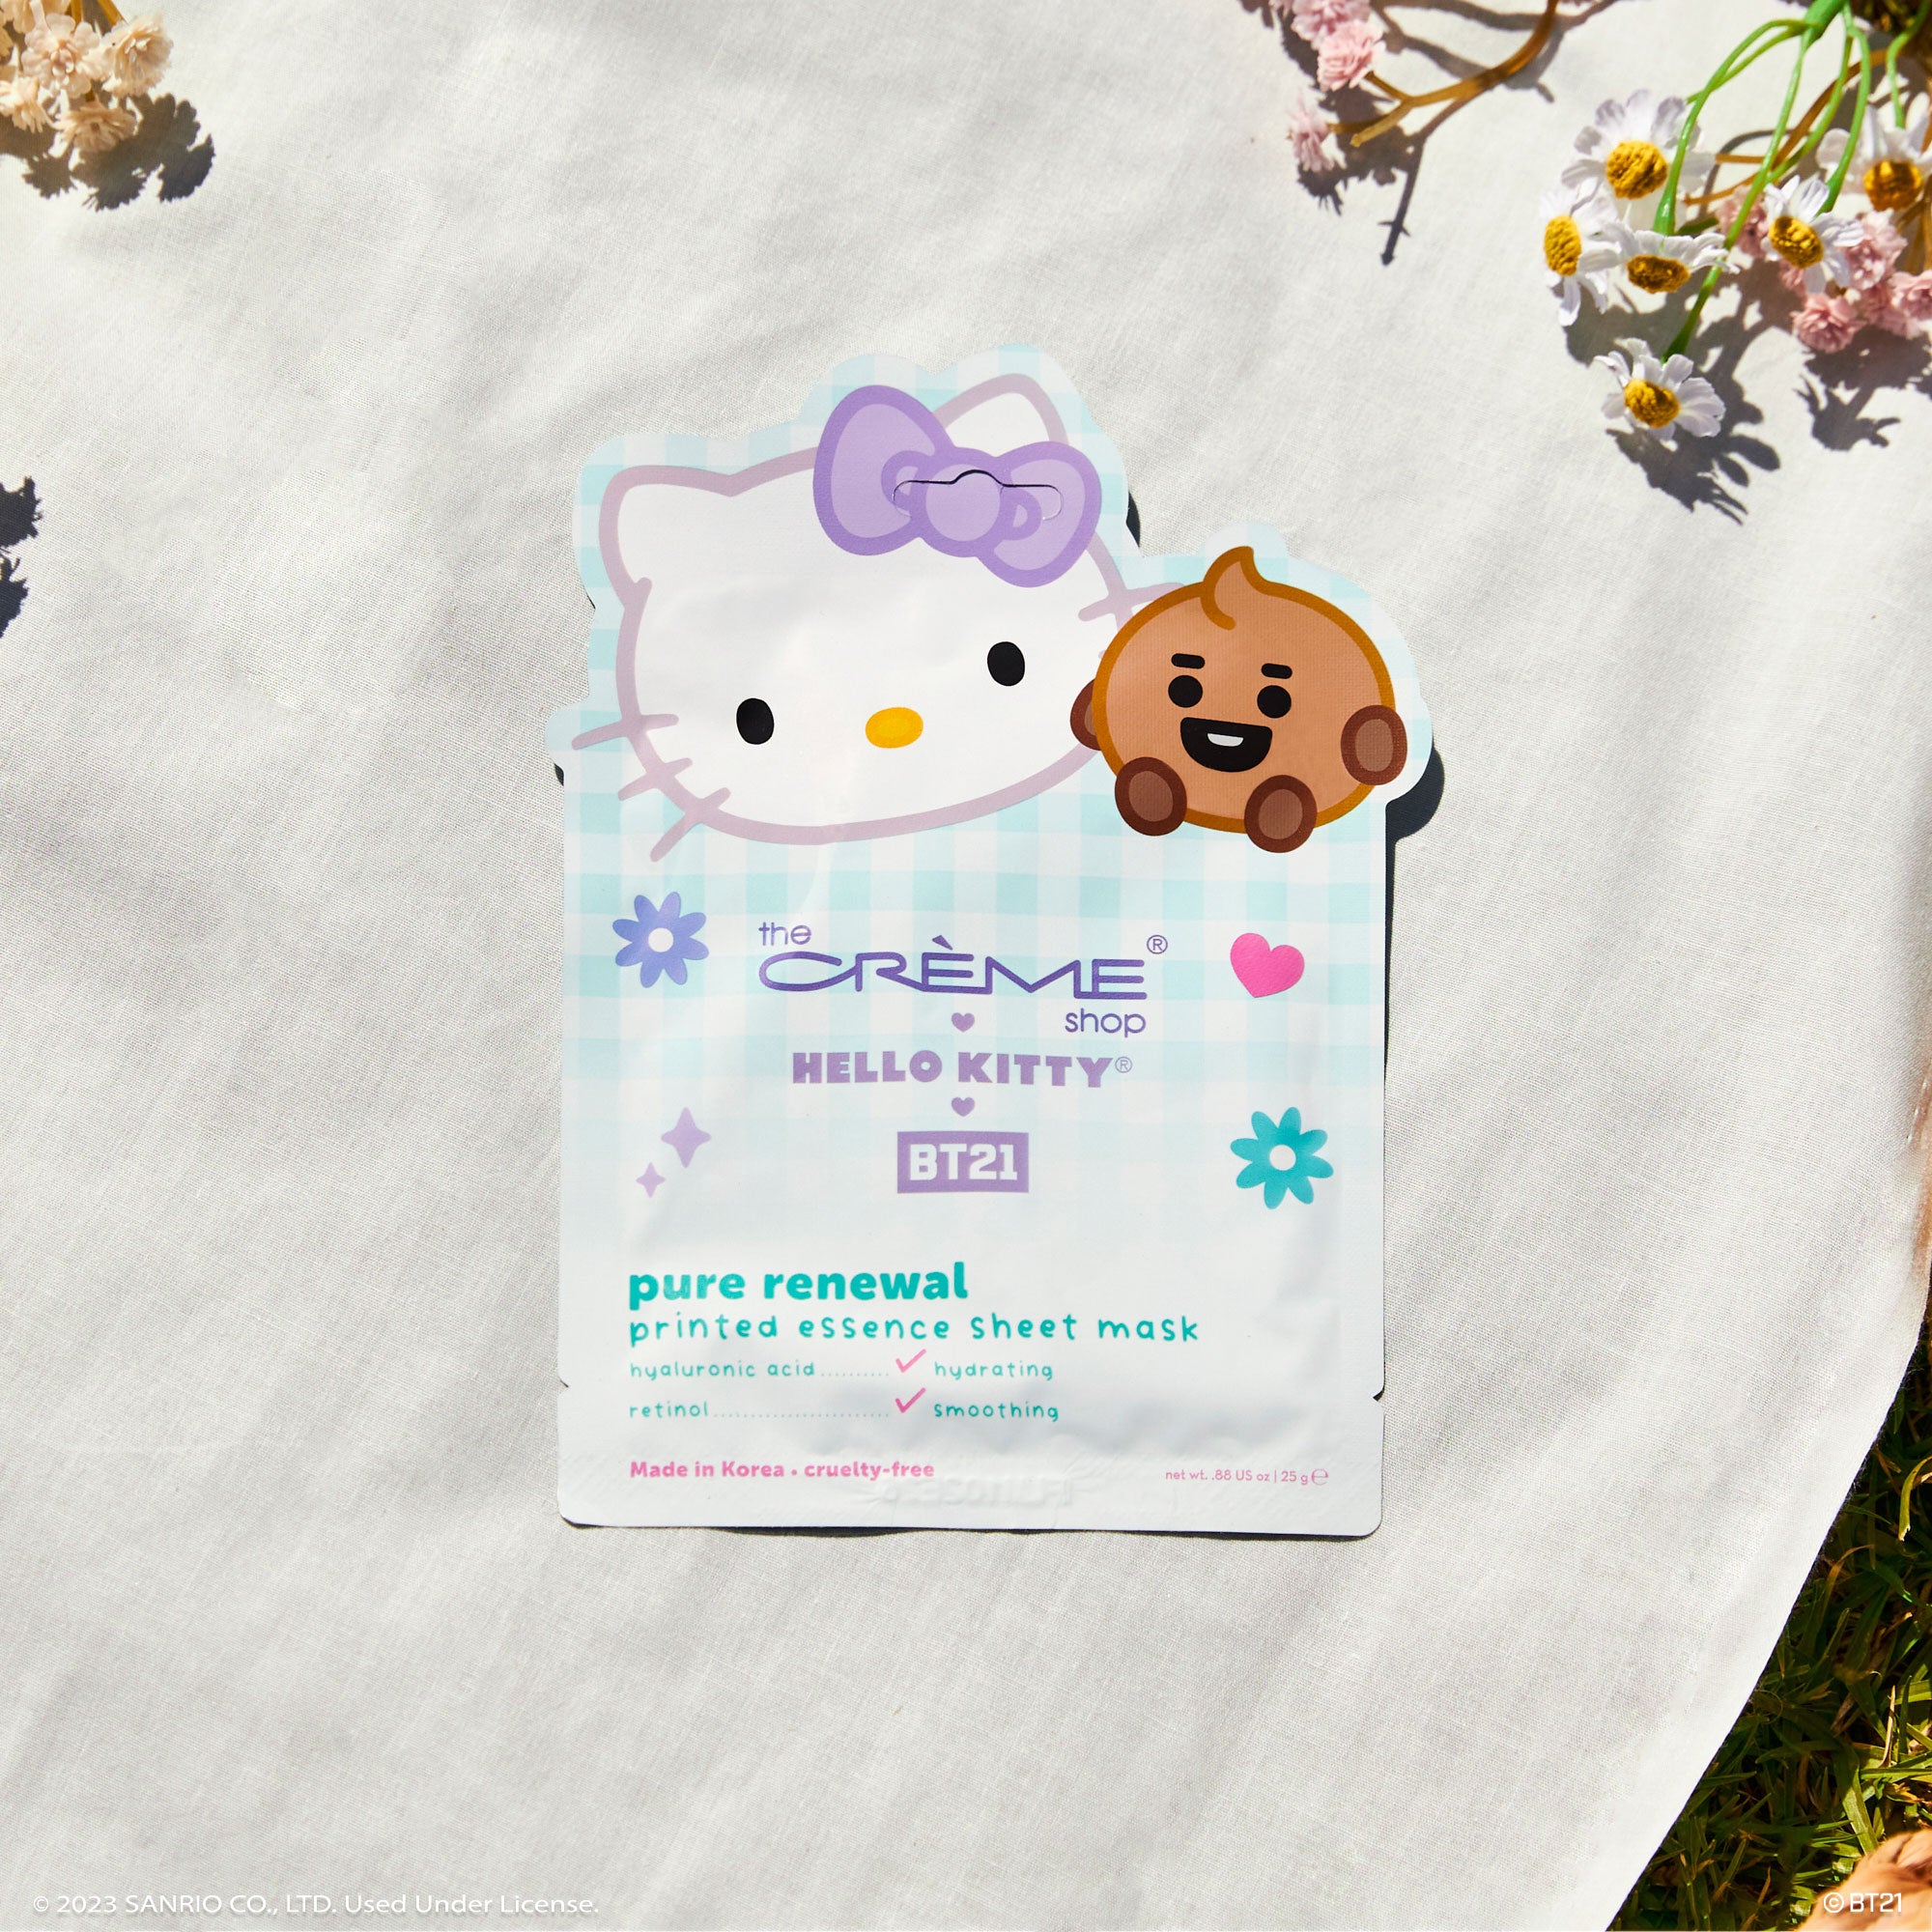 Hello Kitty & BT21 Pure Renewal Printed Essence Sheet Mask Beauty The Crème Shop   